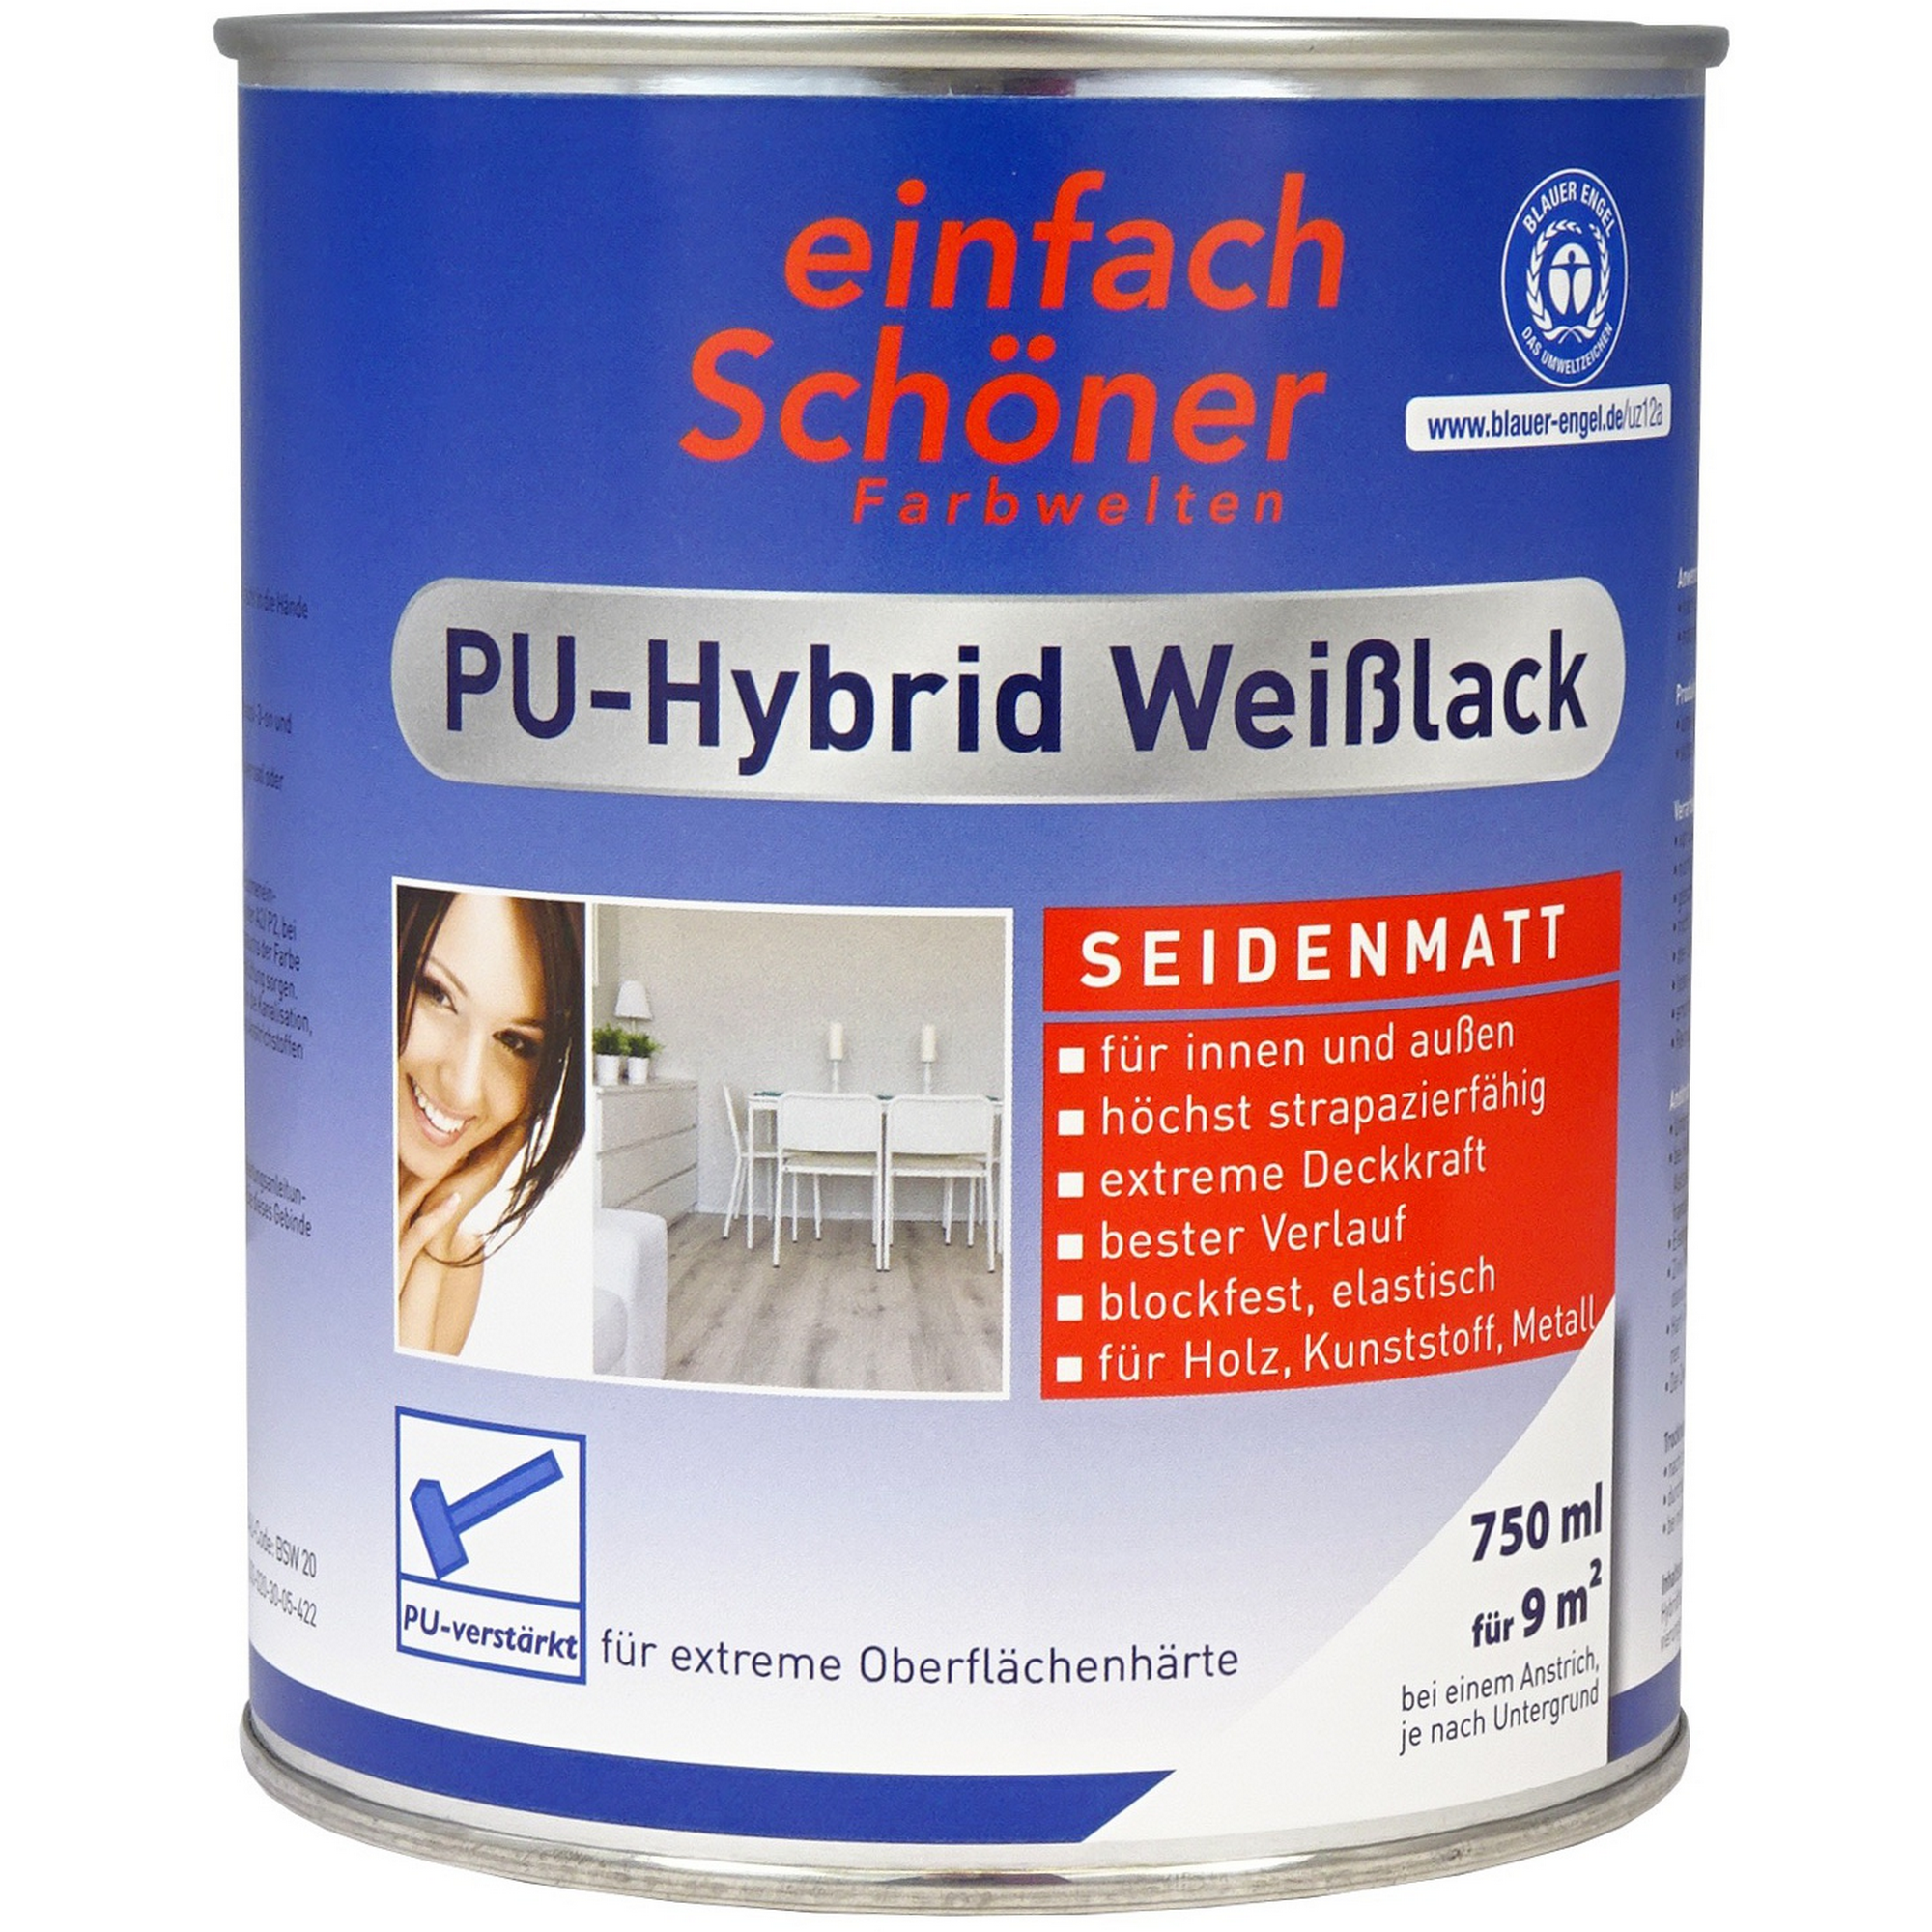 PU-Hybrid Weißlack seidenmatt 750 ml + product picture